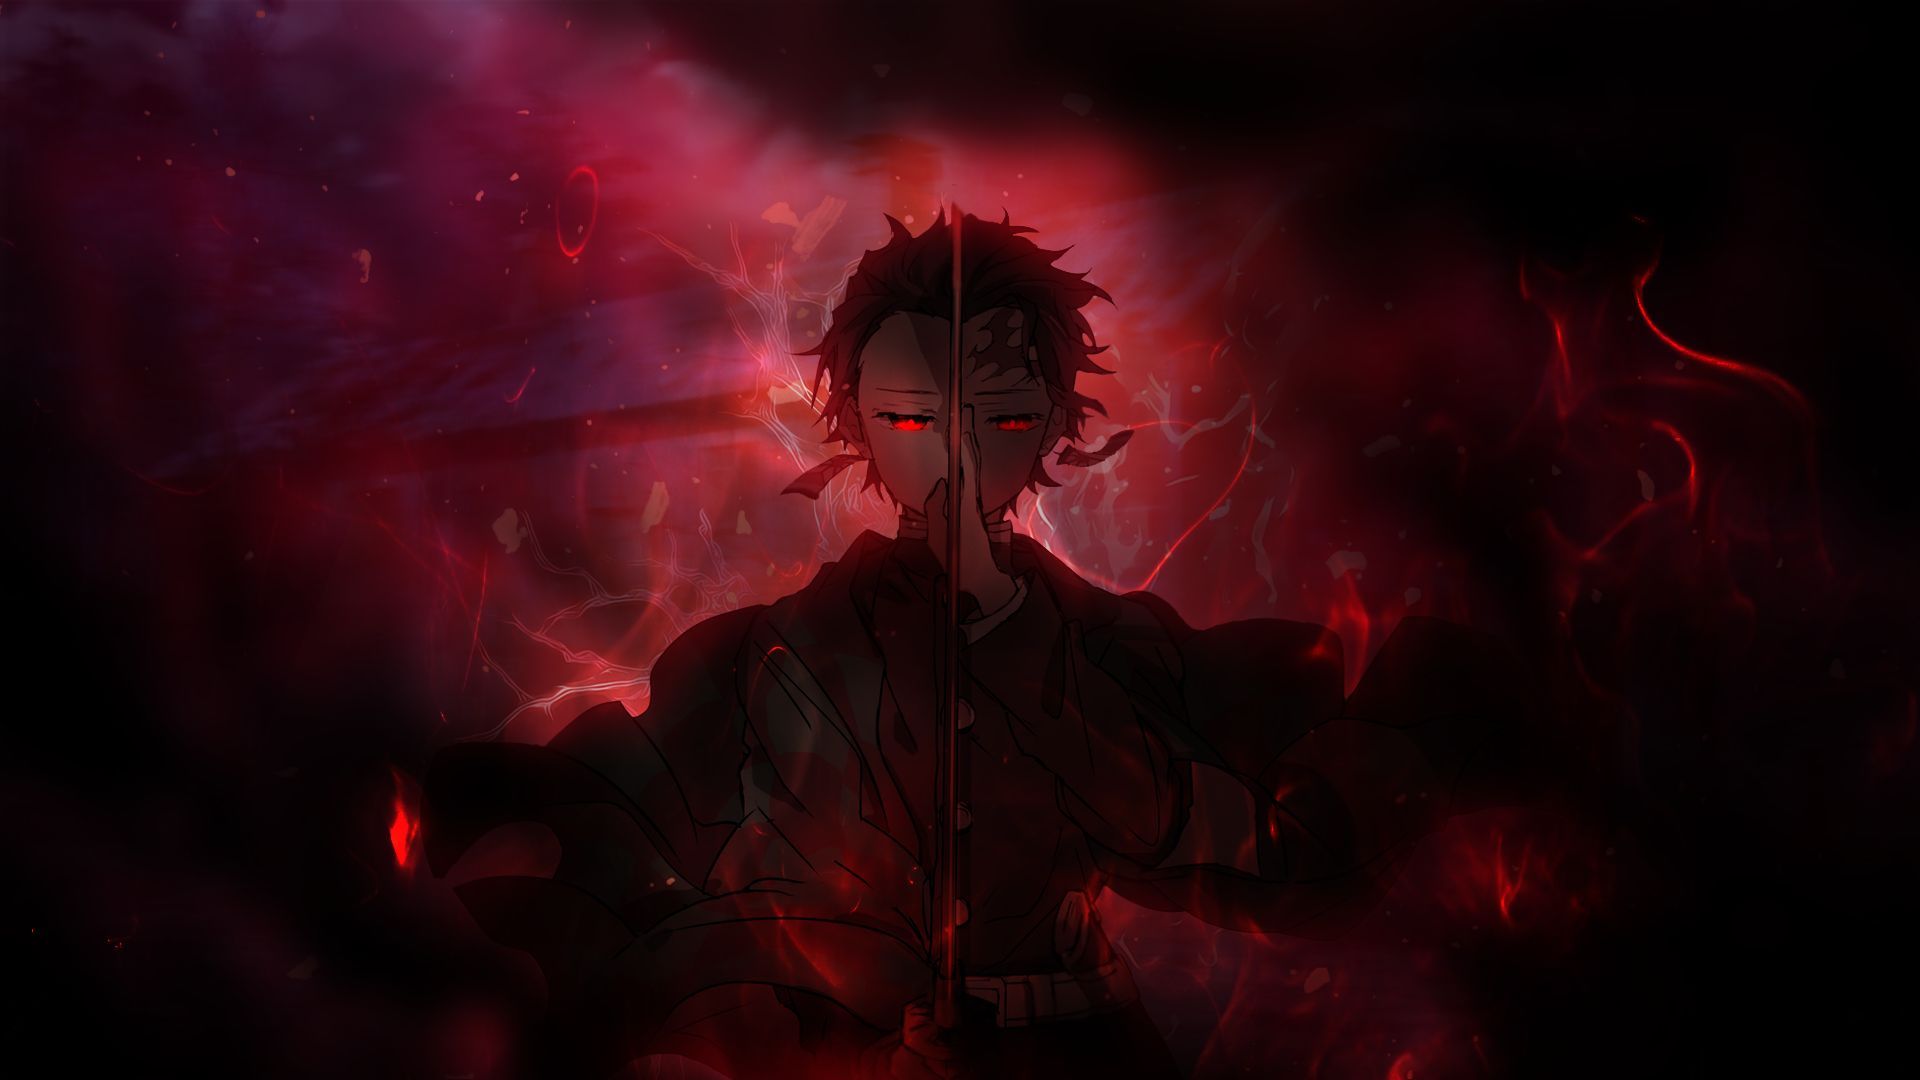 Anime, Demon Slayer: Kimetsu no Yaiba, Nezuko Kamado, red eyes, red smoke, dark background - Tanjiro Kamado